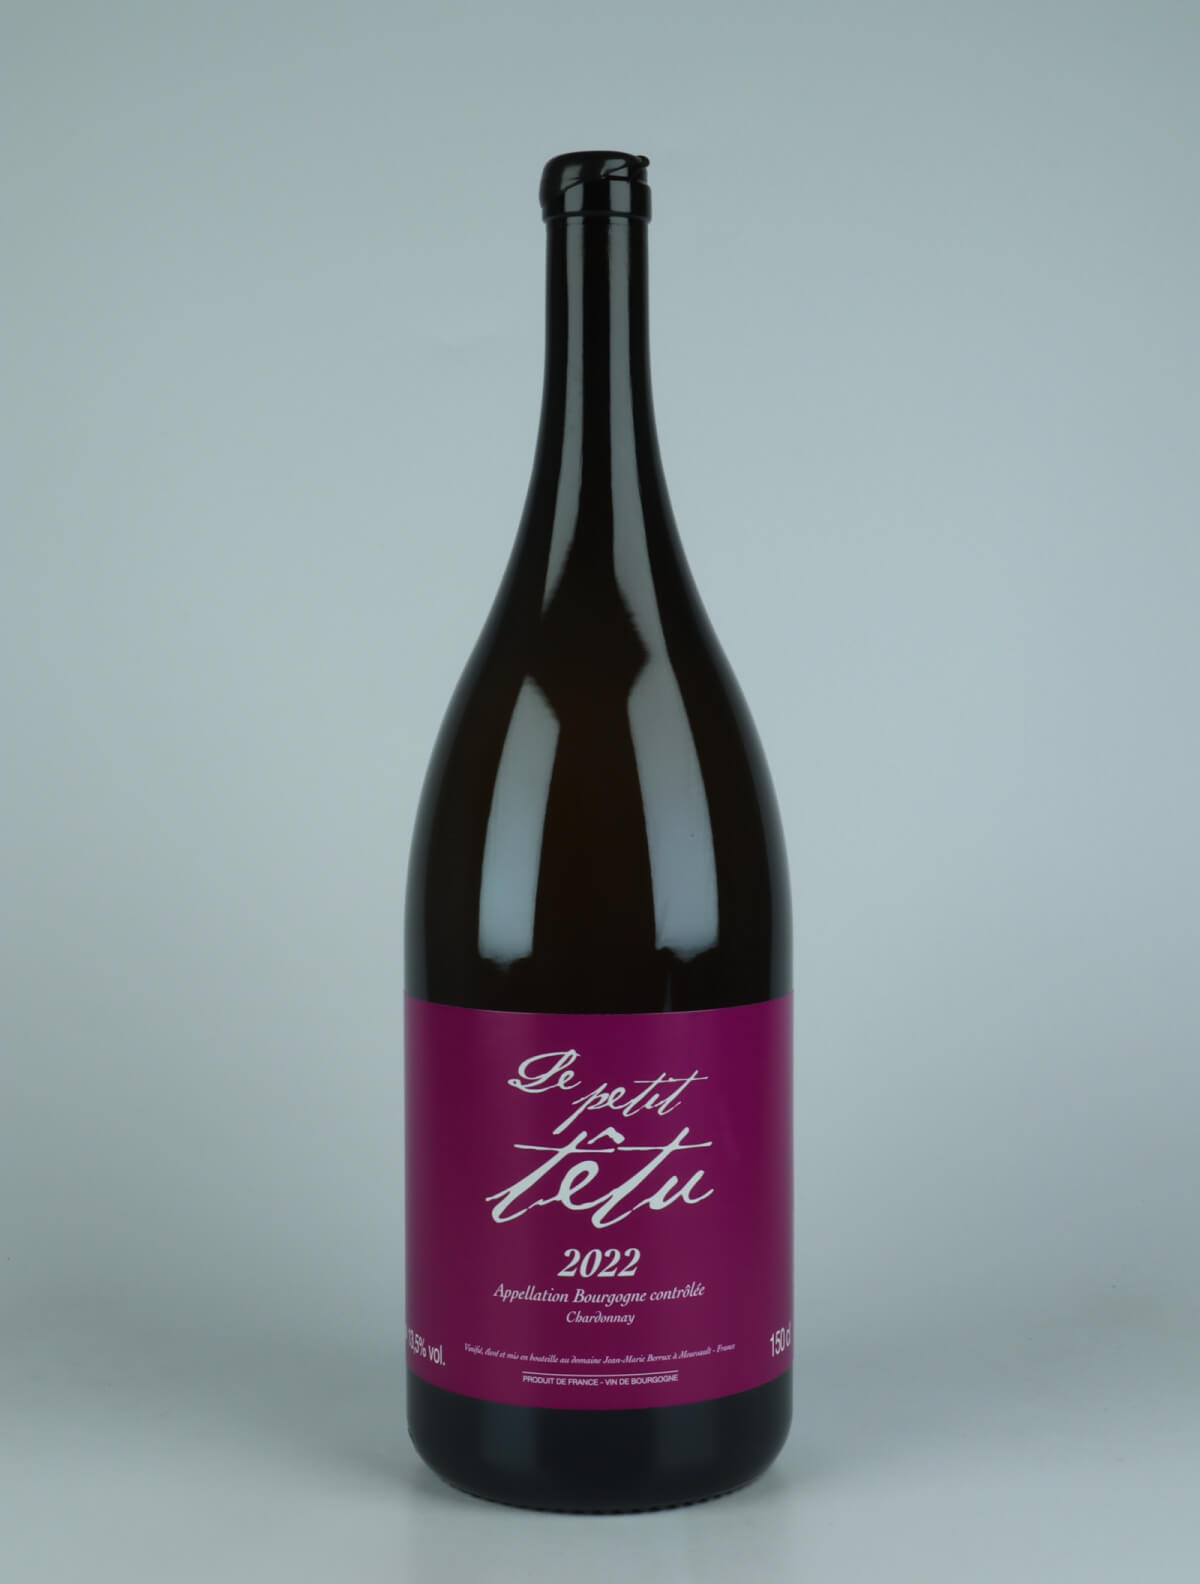 A bottle 2022 Le Petit Têtu - Magnum White wine from Jean-Marie Berrux, Burgundy in France